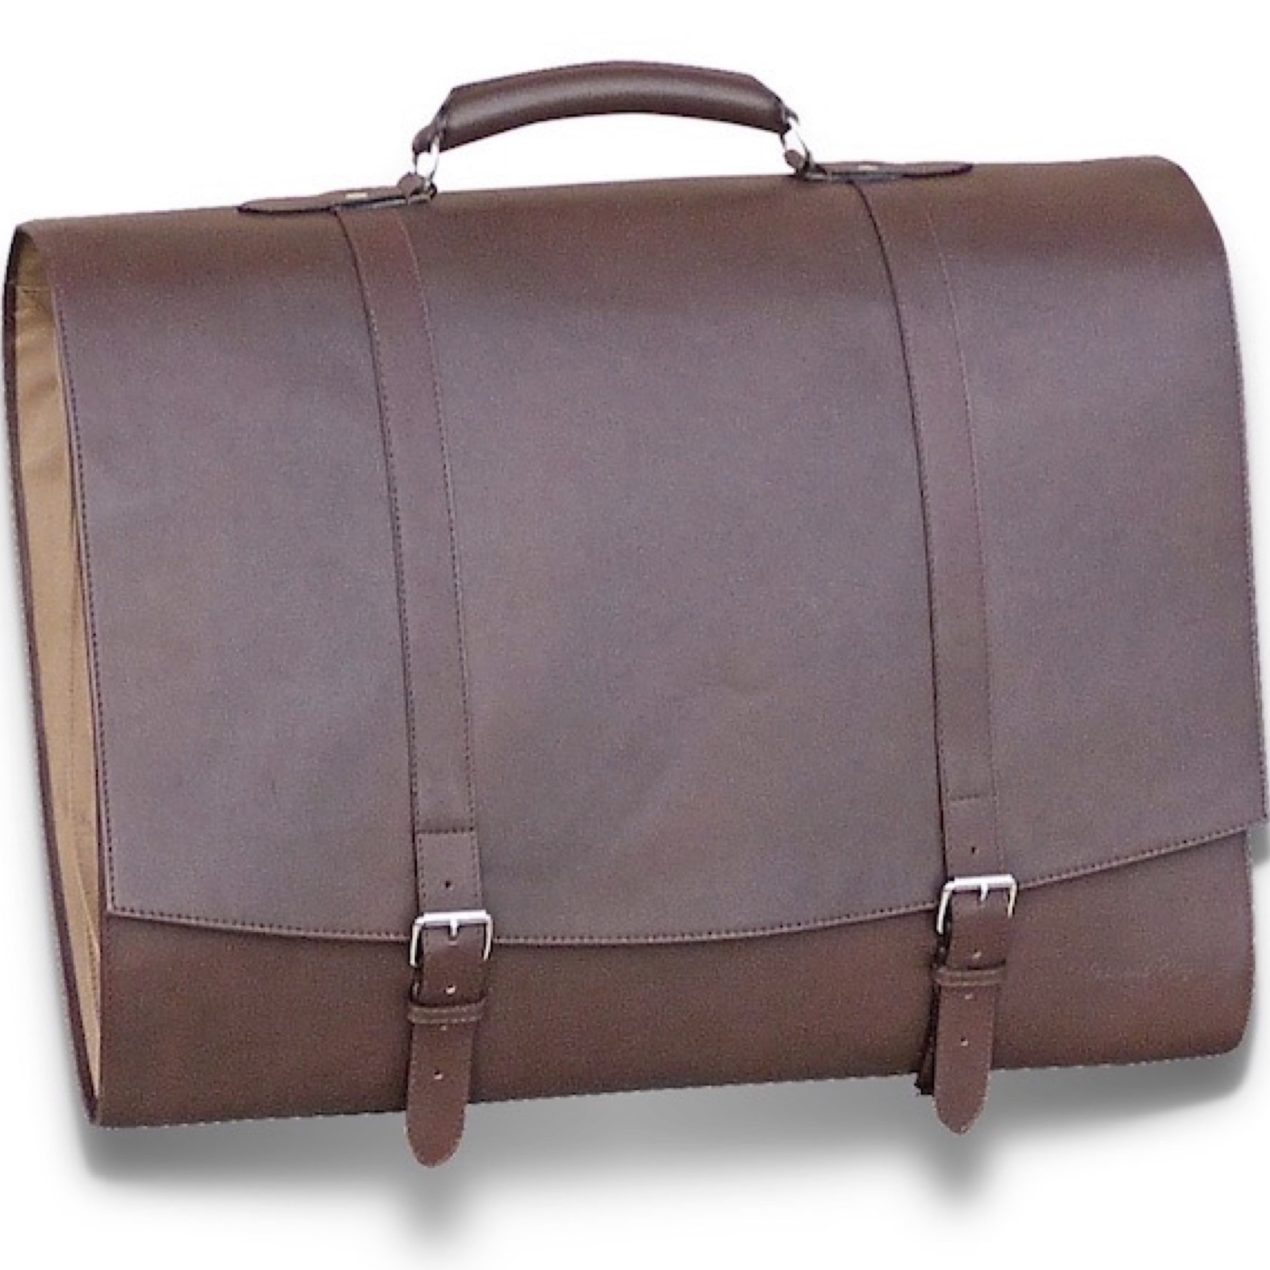 Voyager Bag - Back pack brown leather Roadster and Cabriolet